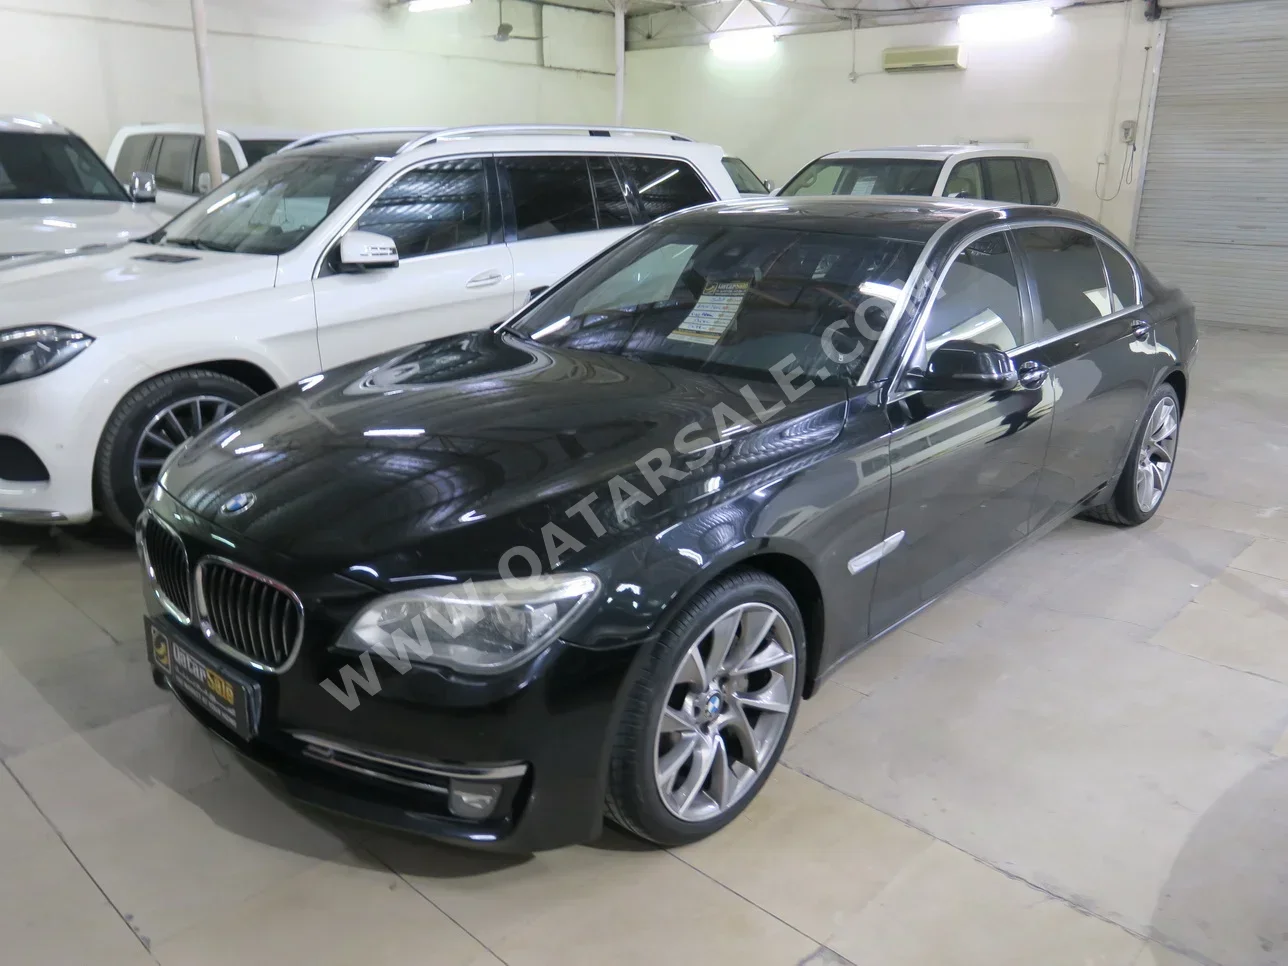 BMW  7-Series  740 Li  2015  Automatic  127,000 Km  6 Cylinder  Rear Wheel Drive (RWD)  Sedan  Gray